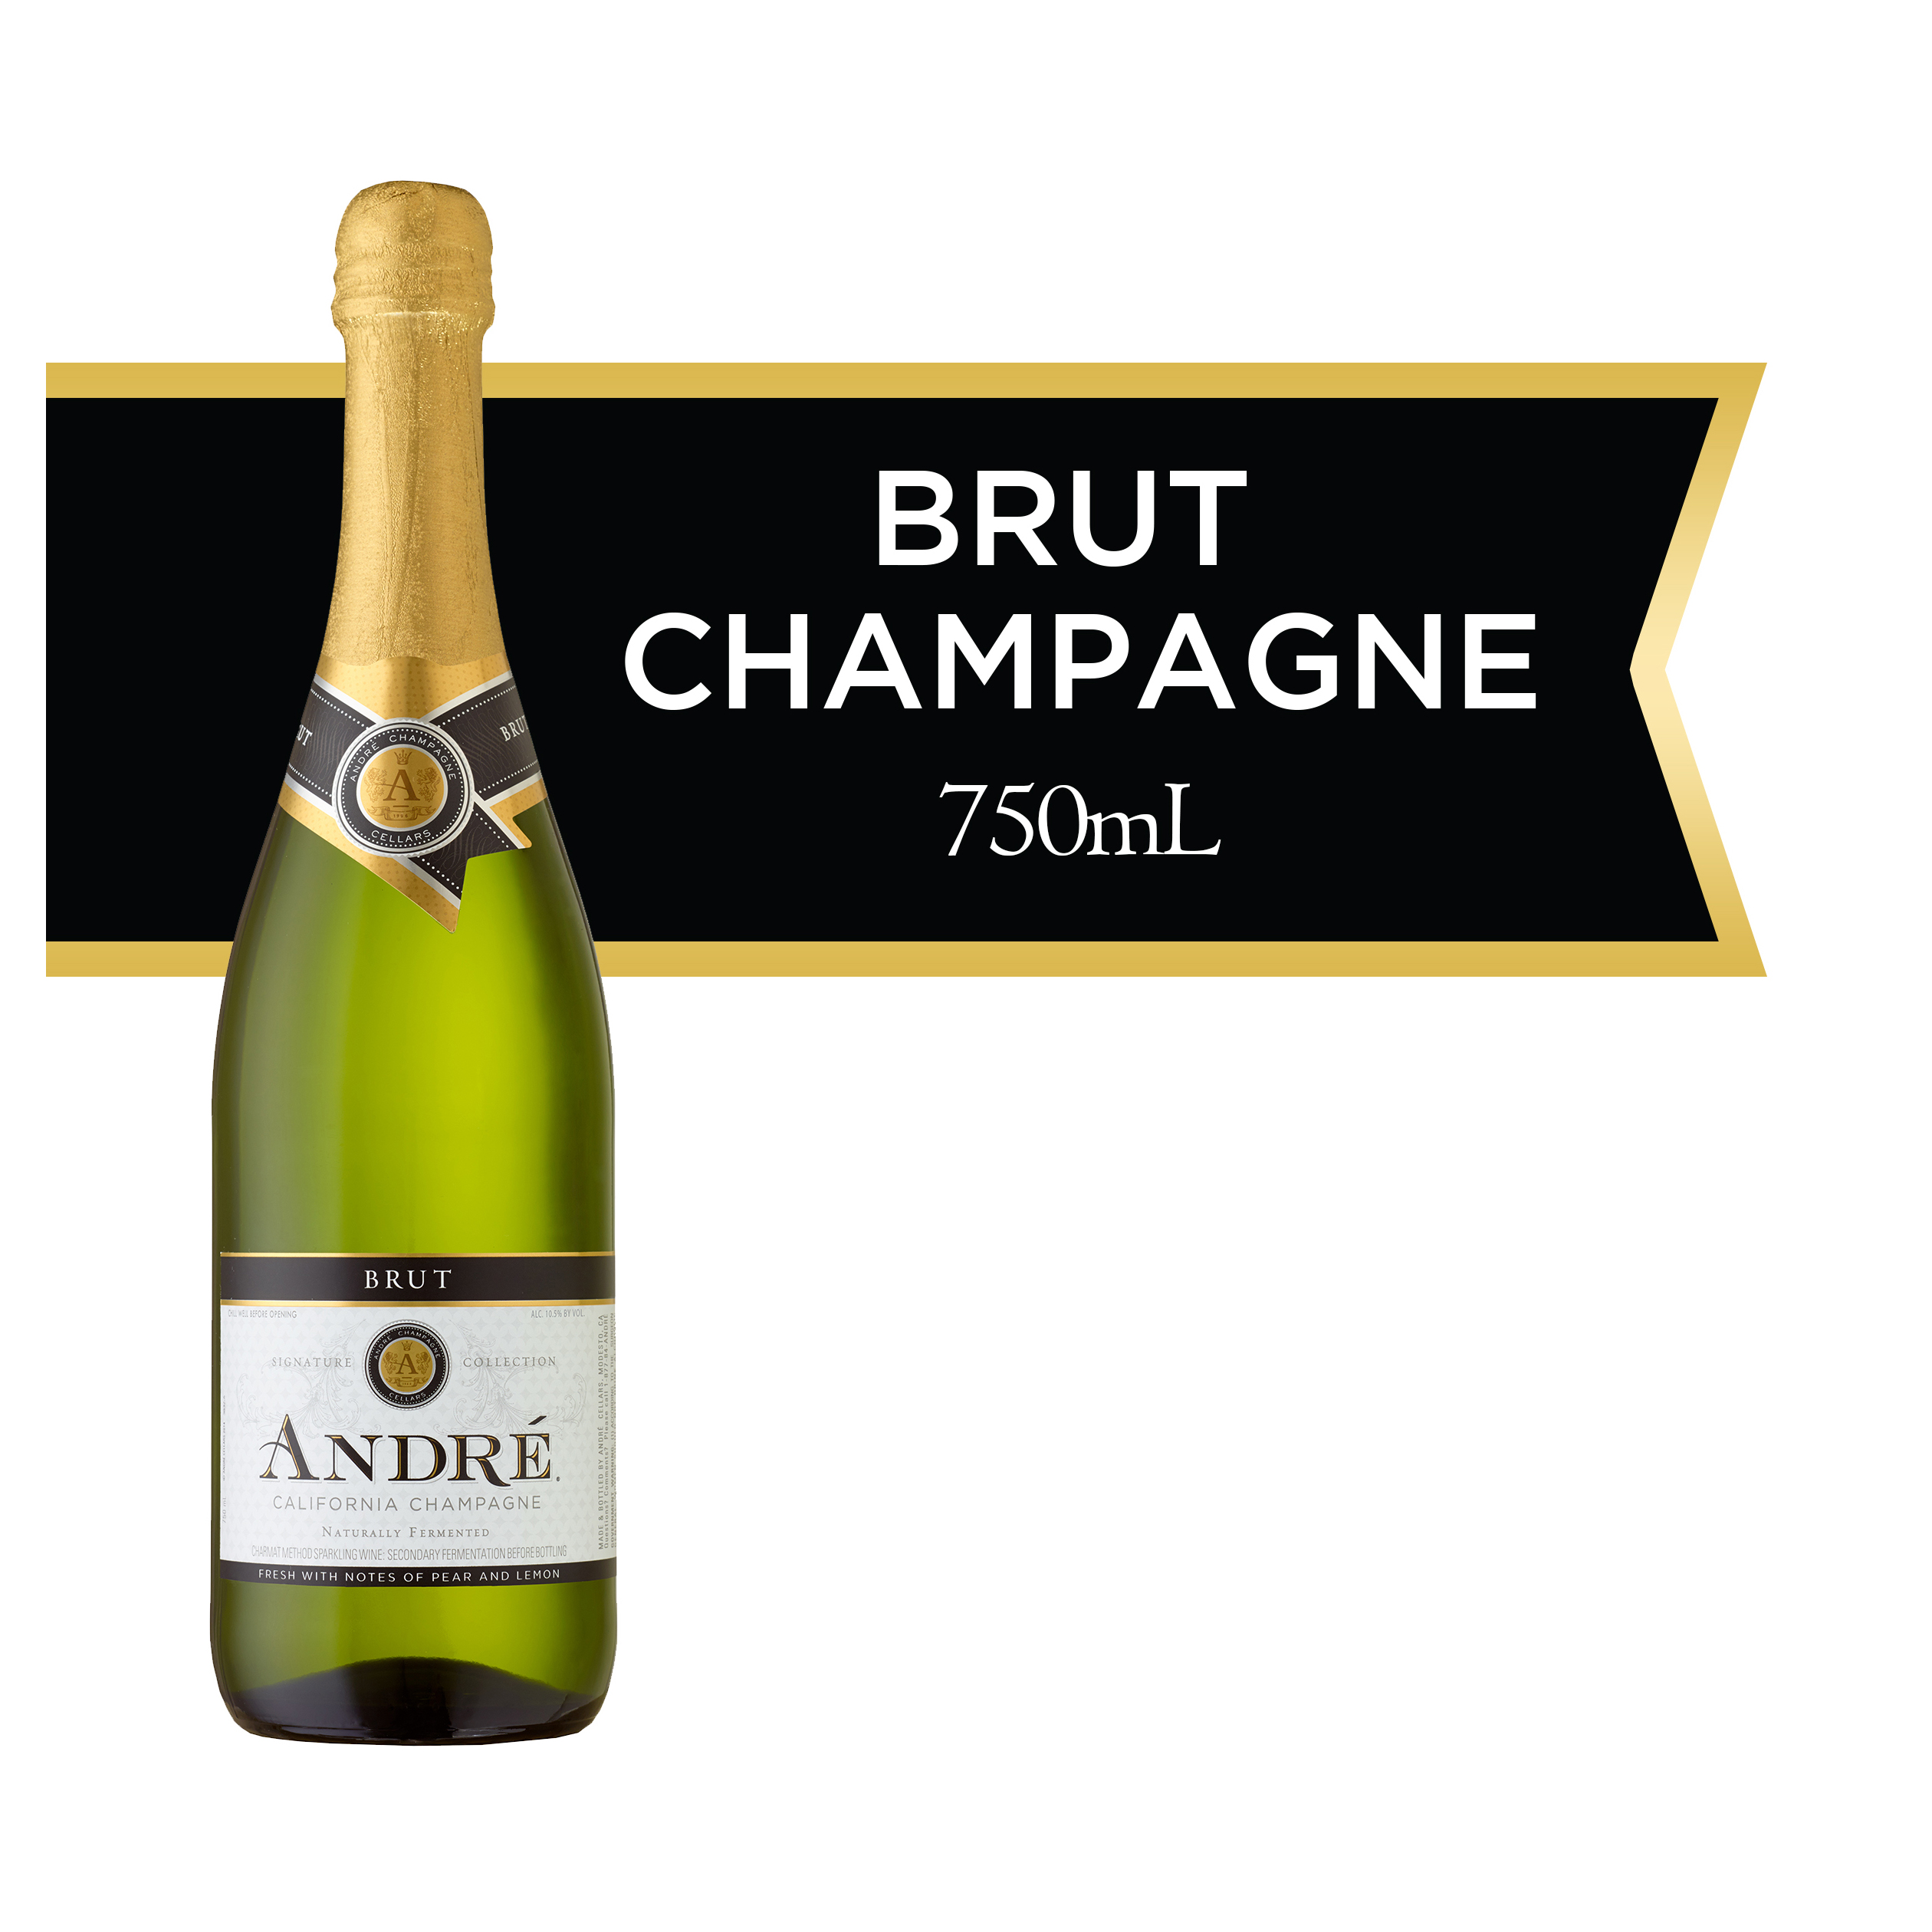 Andre Champagne Brut Sparkling White Wine, California, 750ml Glass Bottle - image 1 of 7